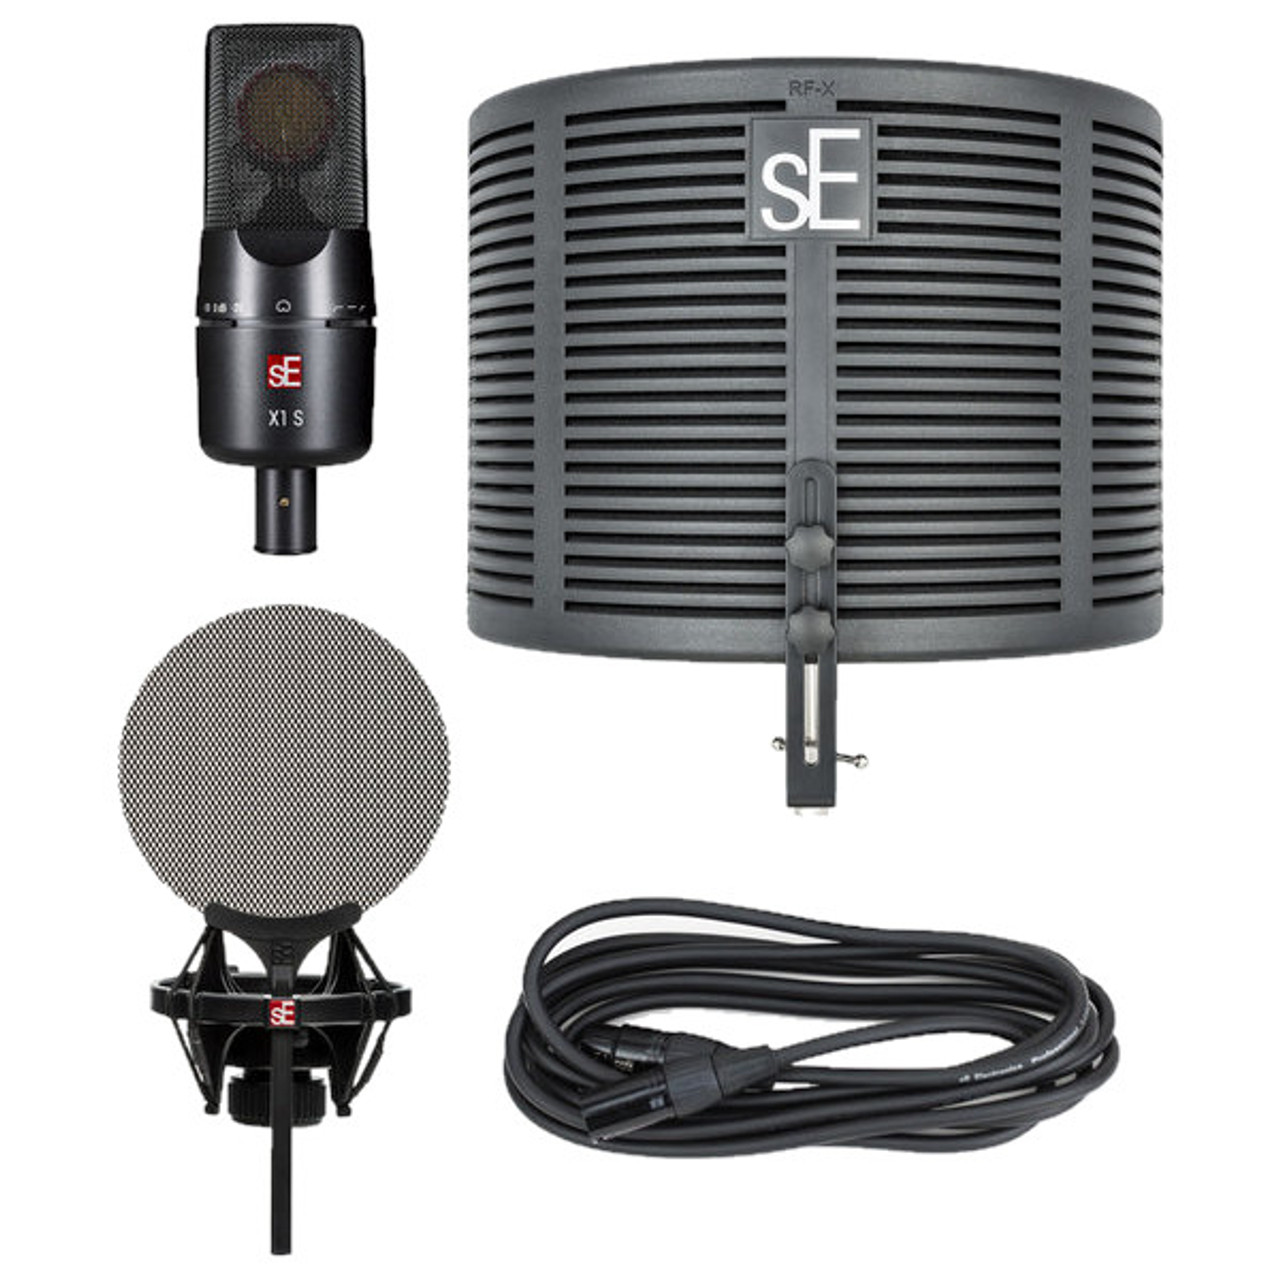 SALE／61%OFF】 MXL Mics Multi-Pattern Condenser Microphone XLR Connector  Black amp;amp institutohumaniza.org.br